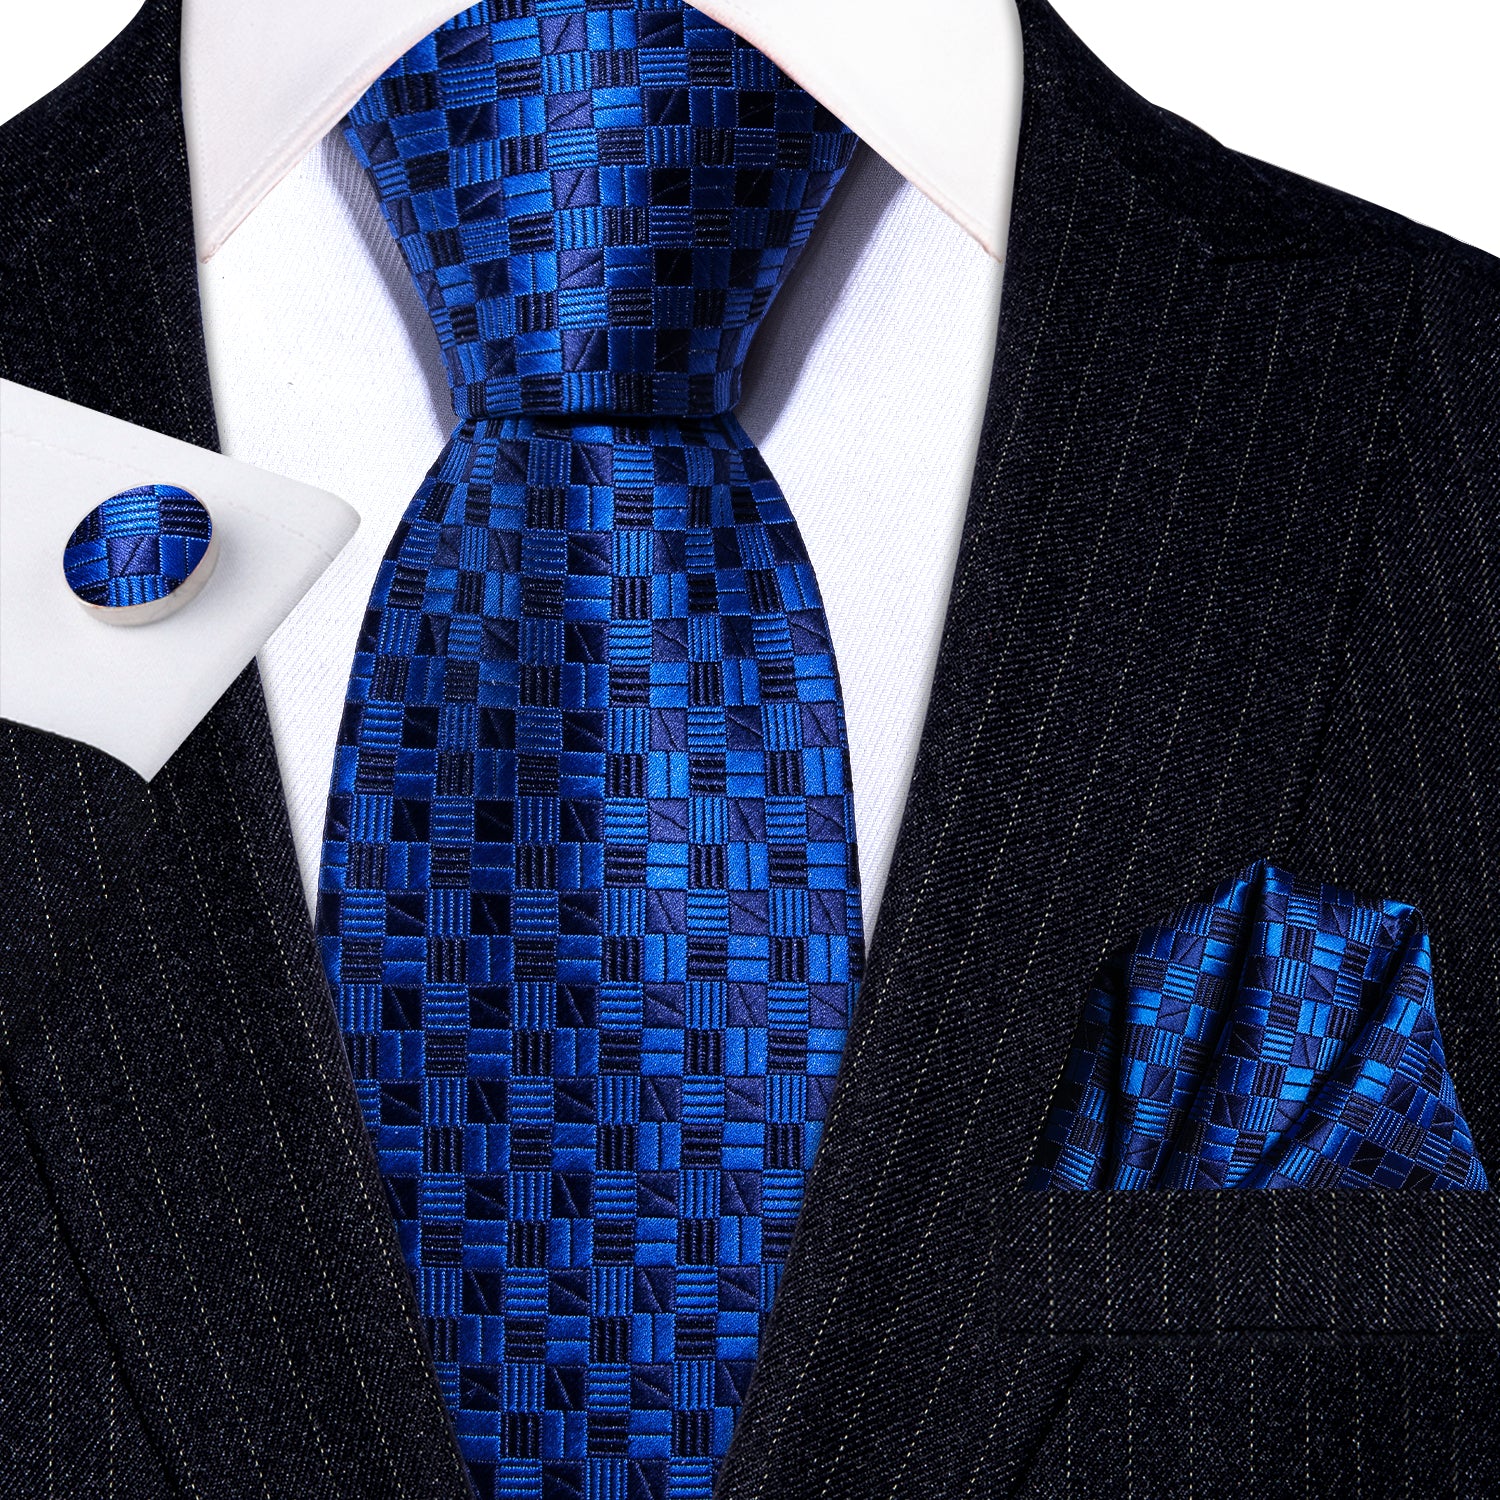 Blue Plaid Silk Tie Pocket Square Cufflinks Set